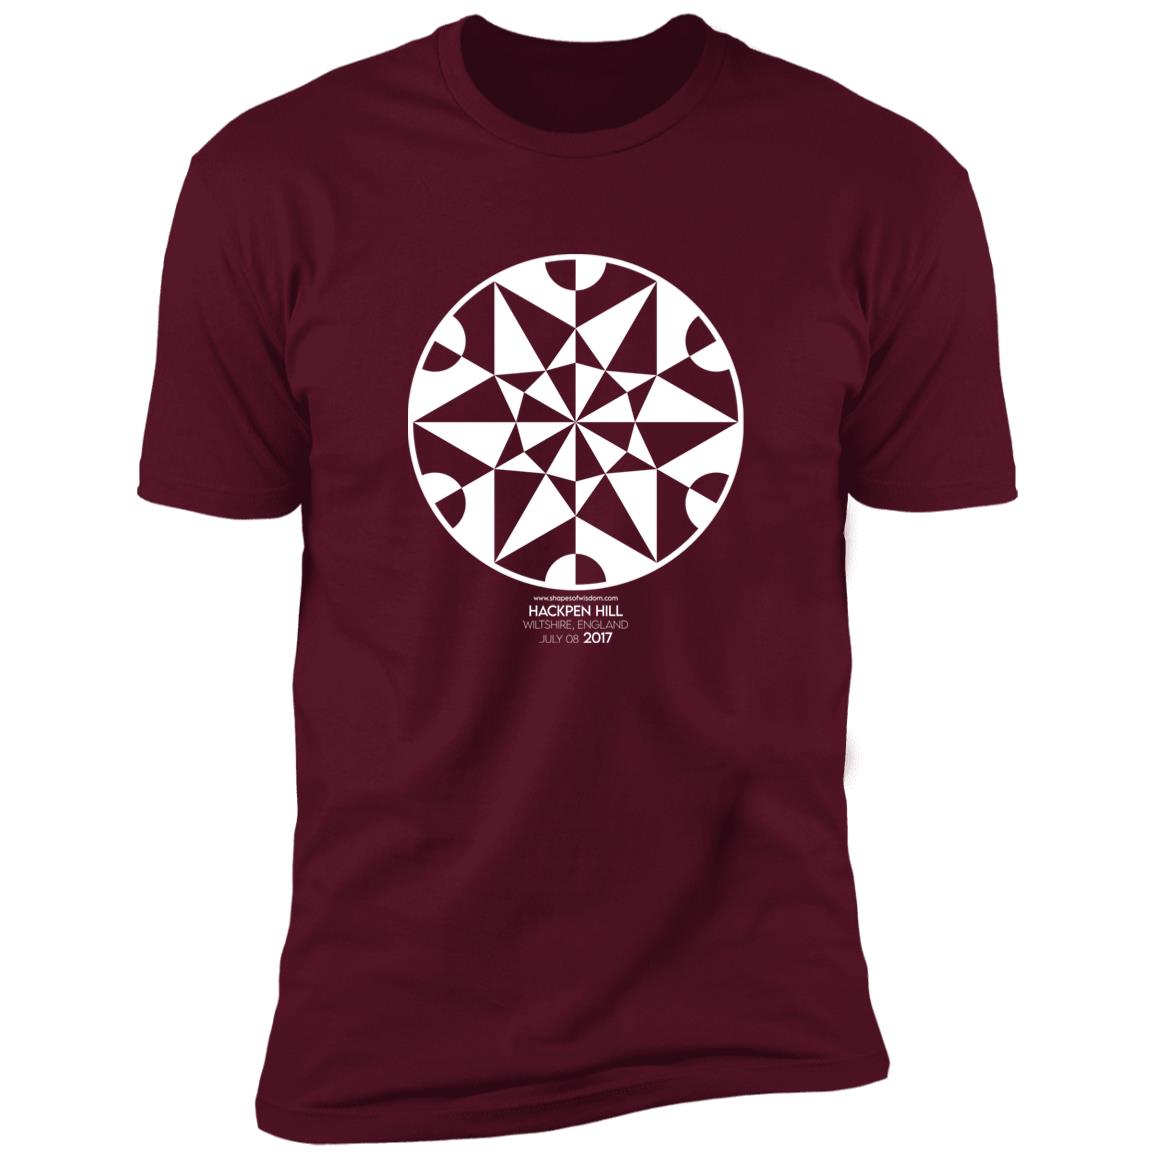 Crop Circle Premium T-Shirt - Hackpen Hill 16